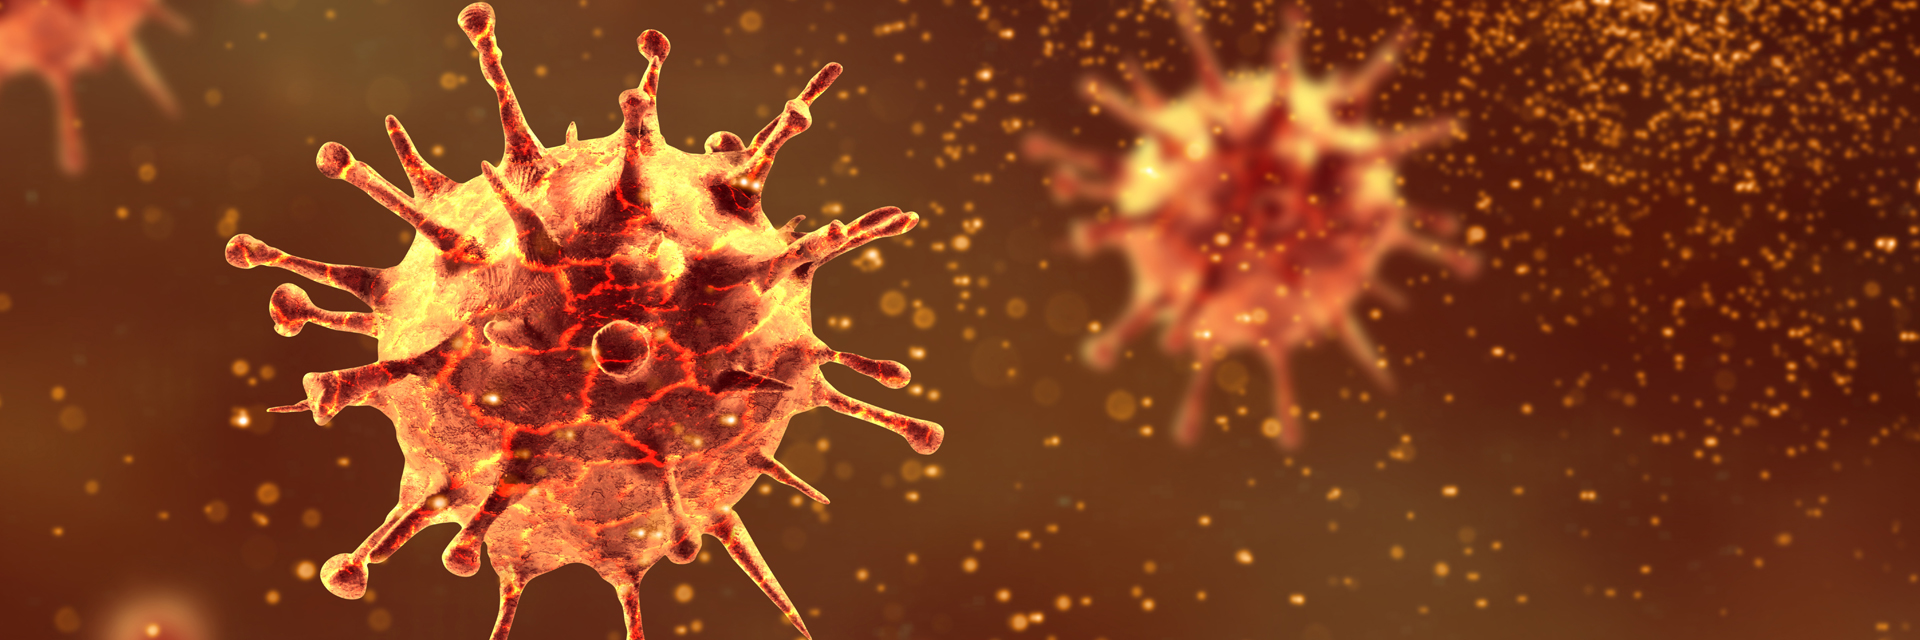 Picture: Macro image of a coronavirus